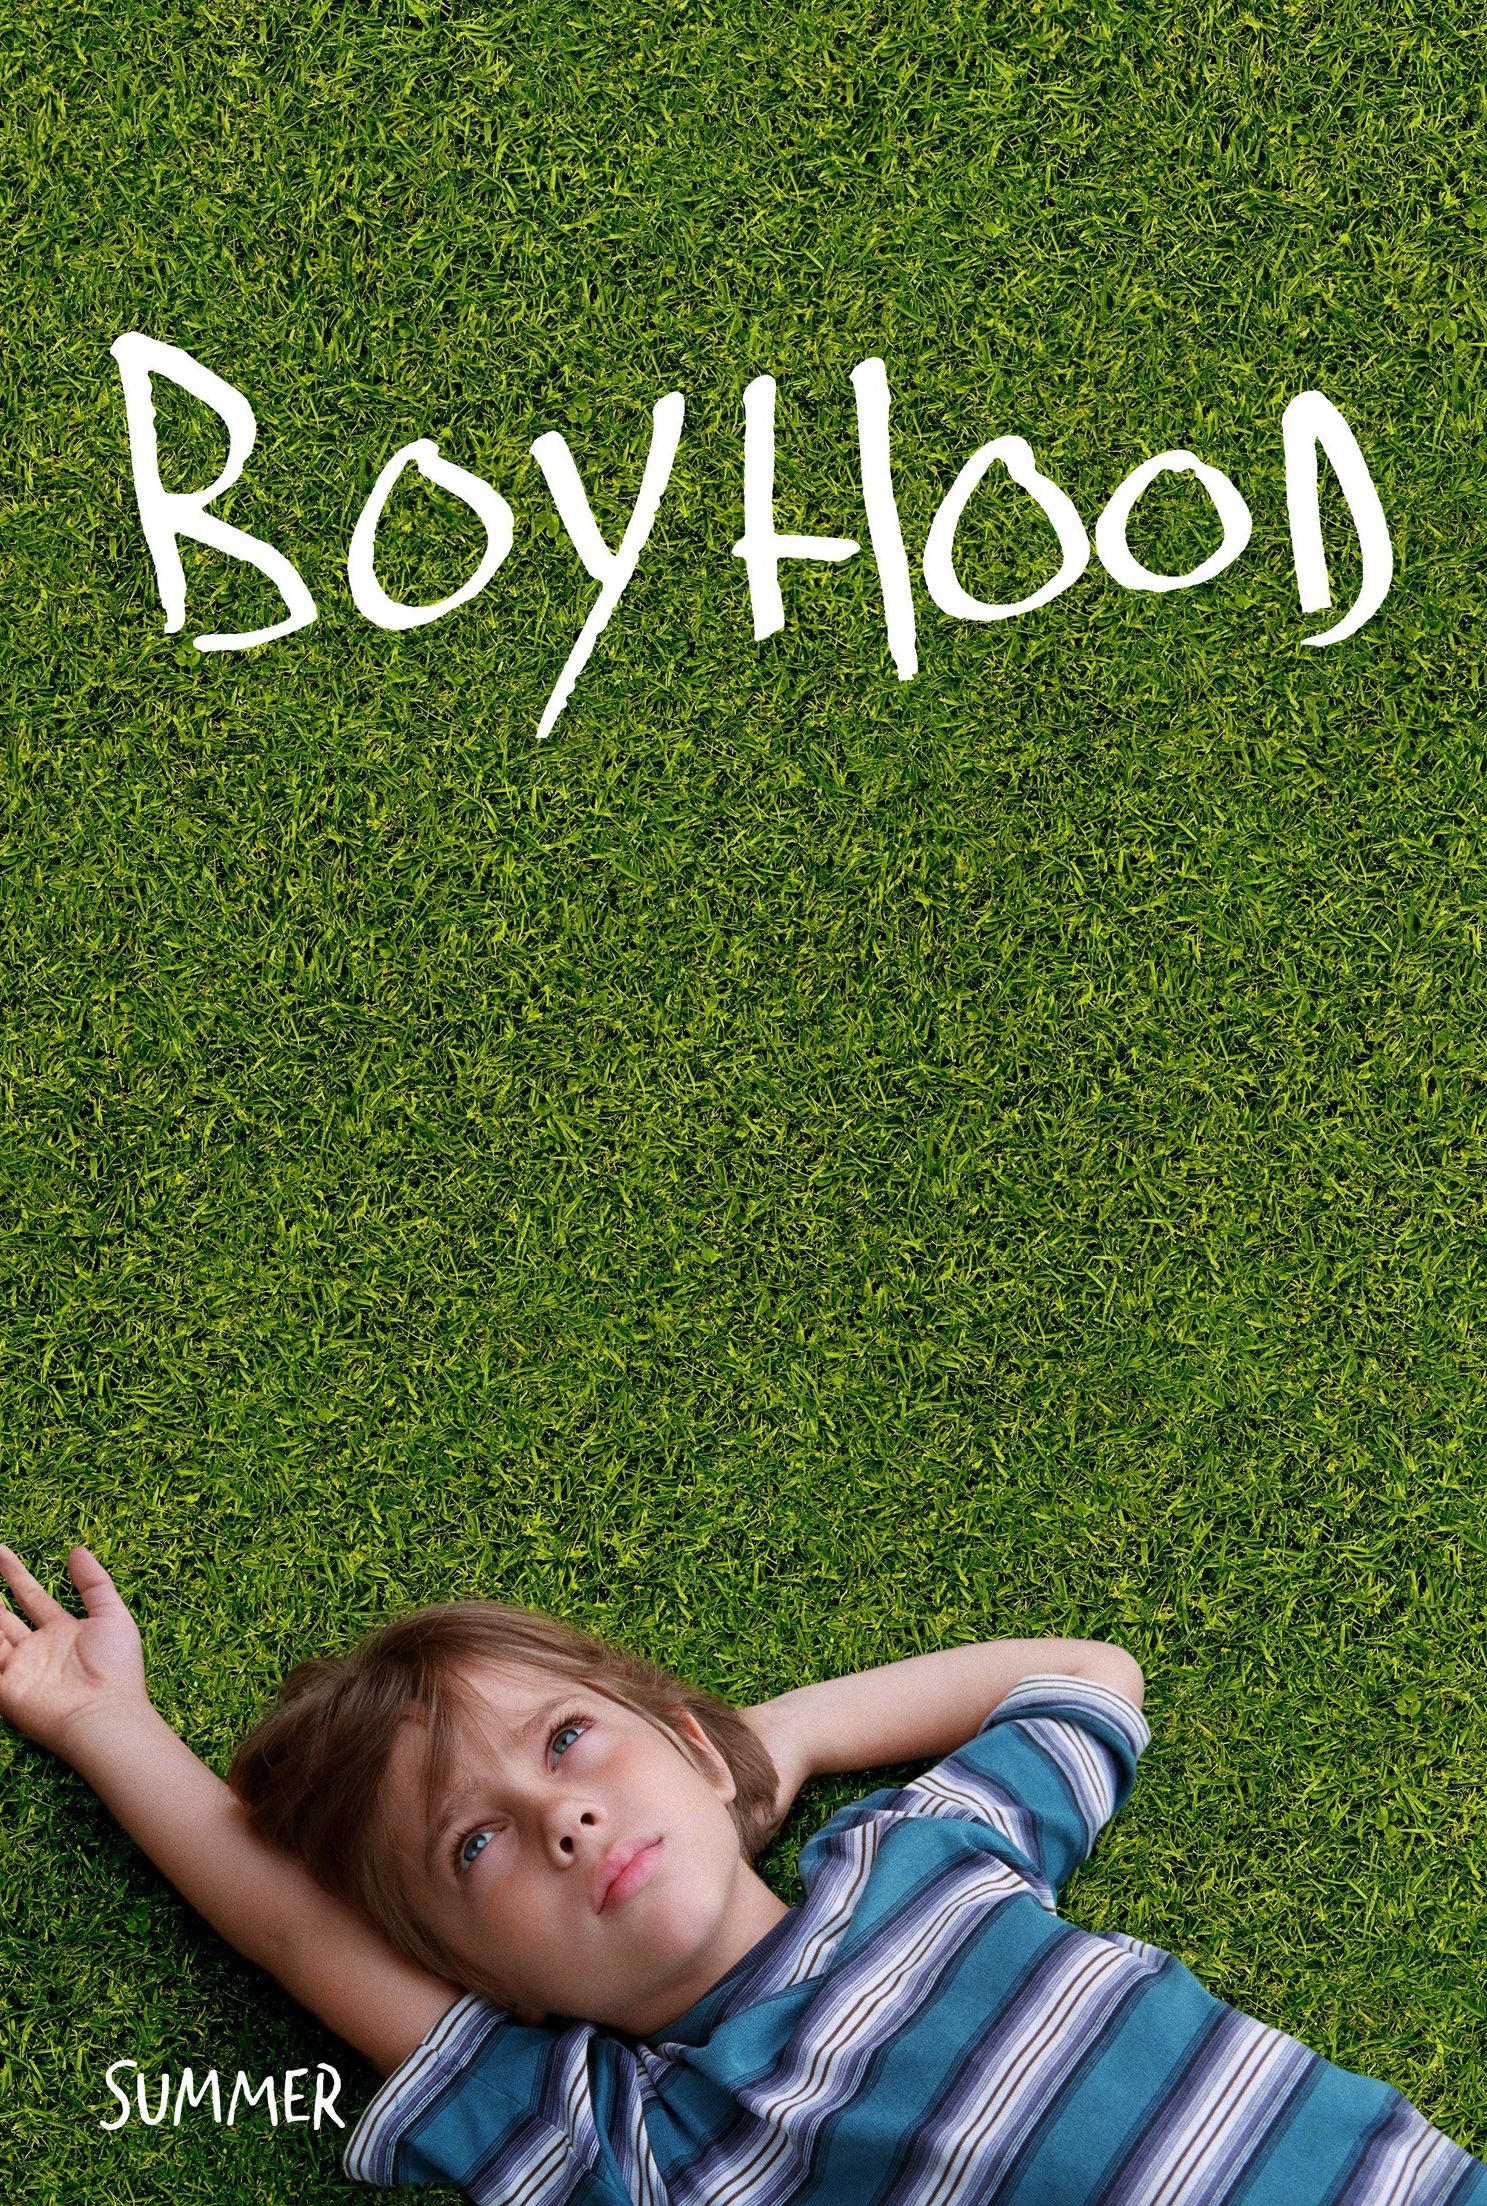 Boyhood Official Poster, release July 11